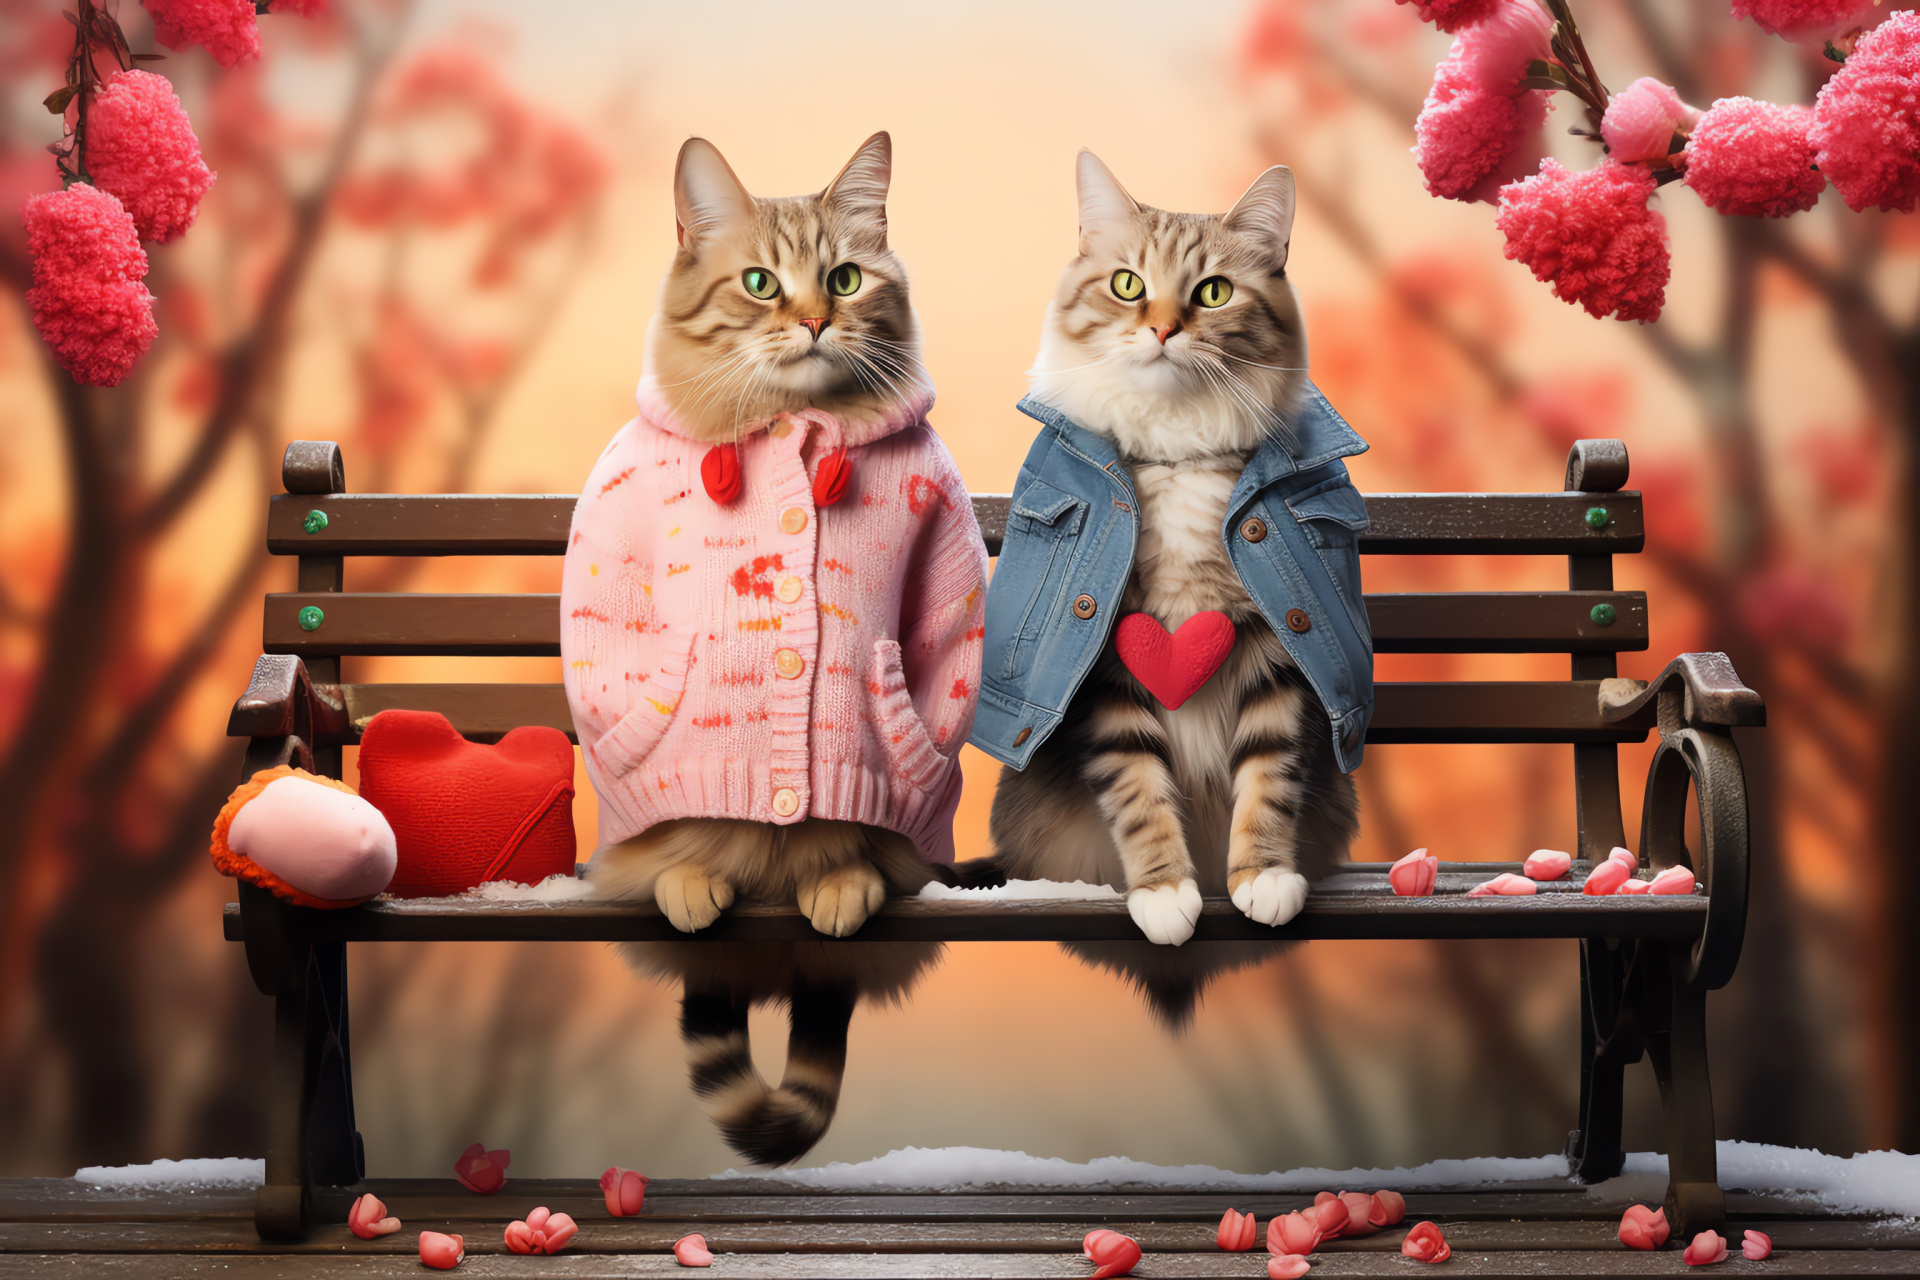 Loving felines, Quiet enclosure, Knit pullovers, Ornate blossoms, Amiable exchange, HD Desktop Image